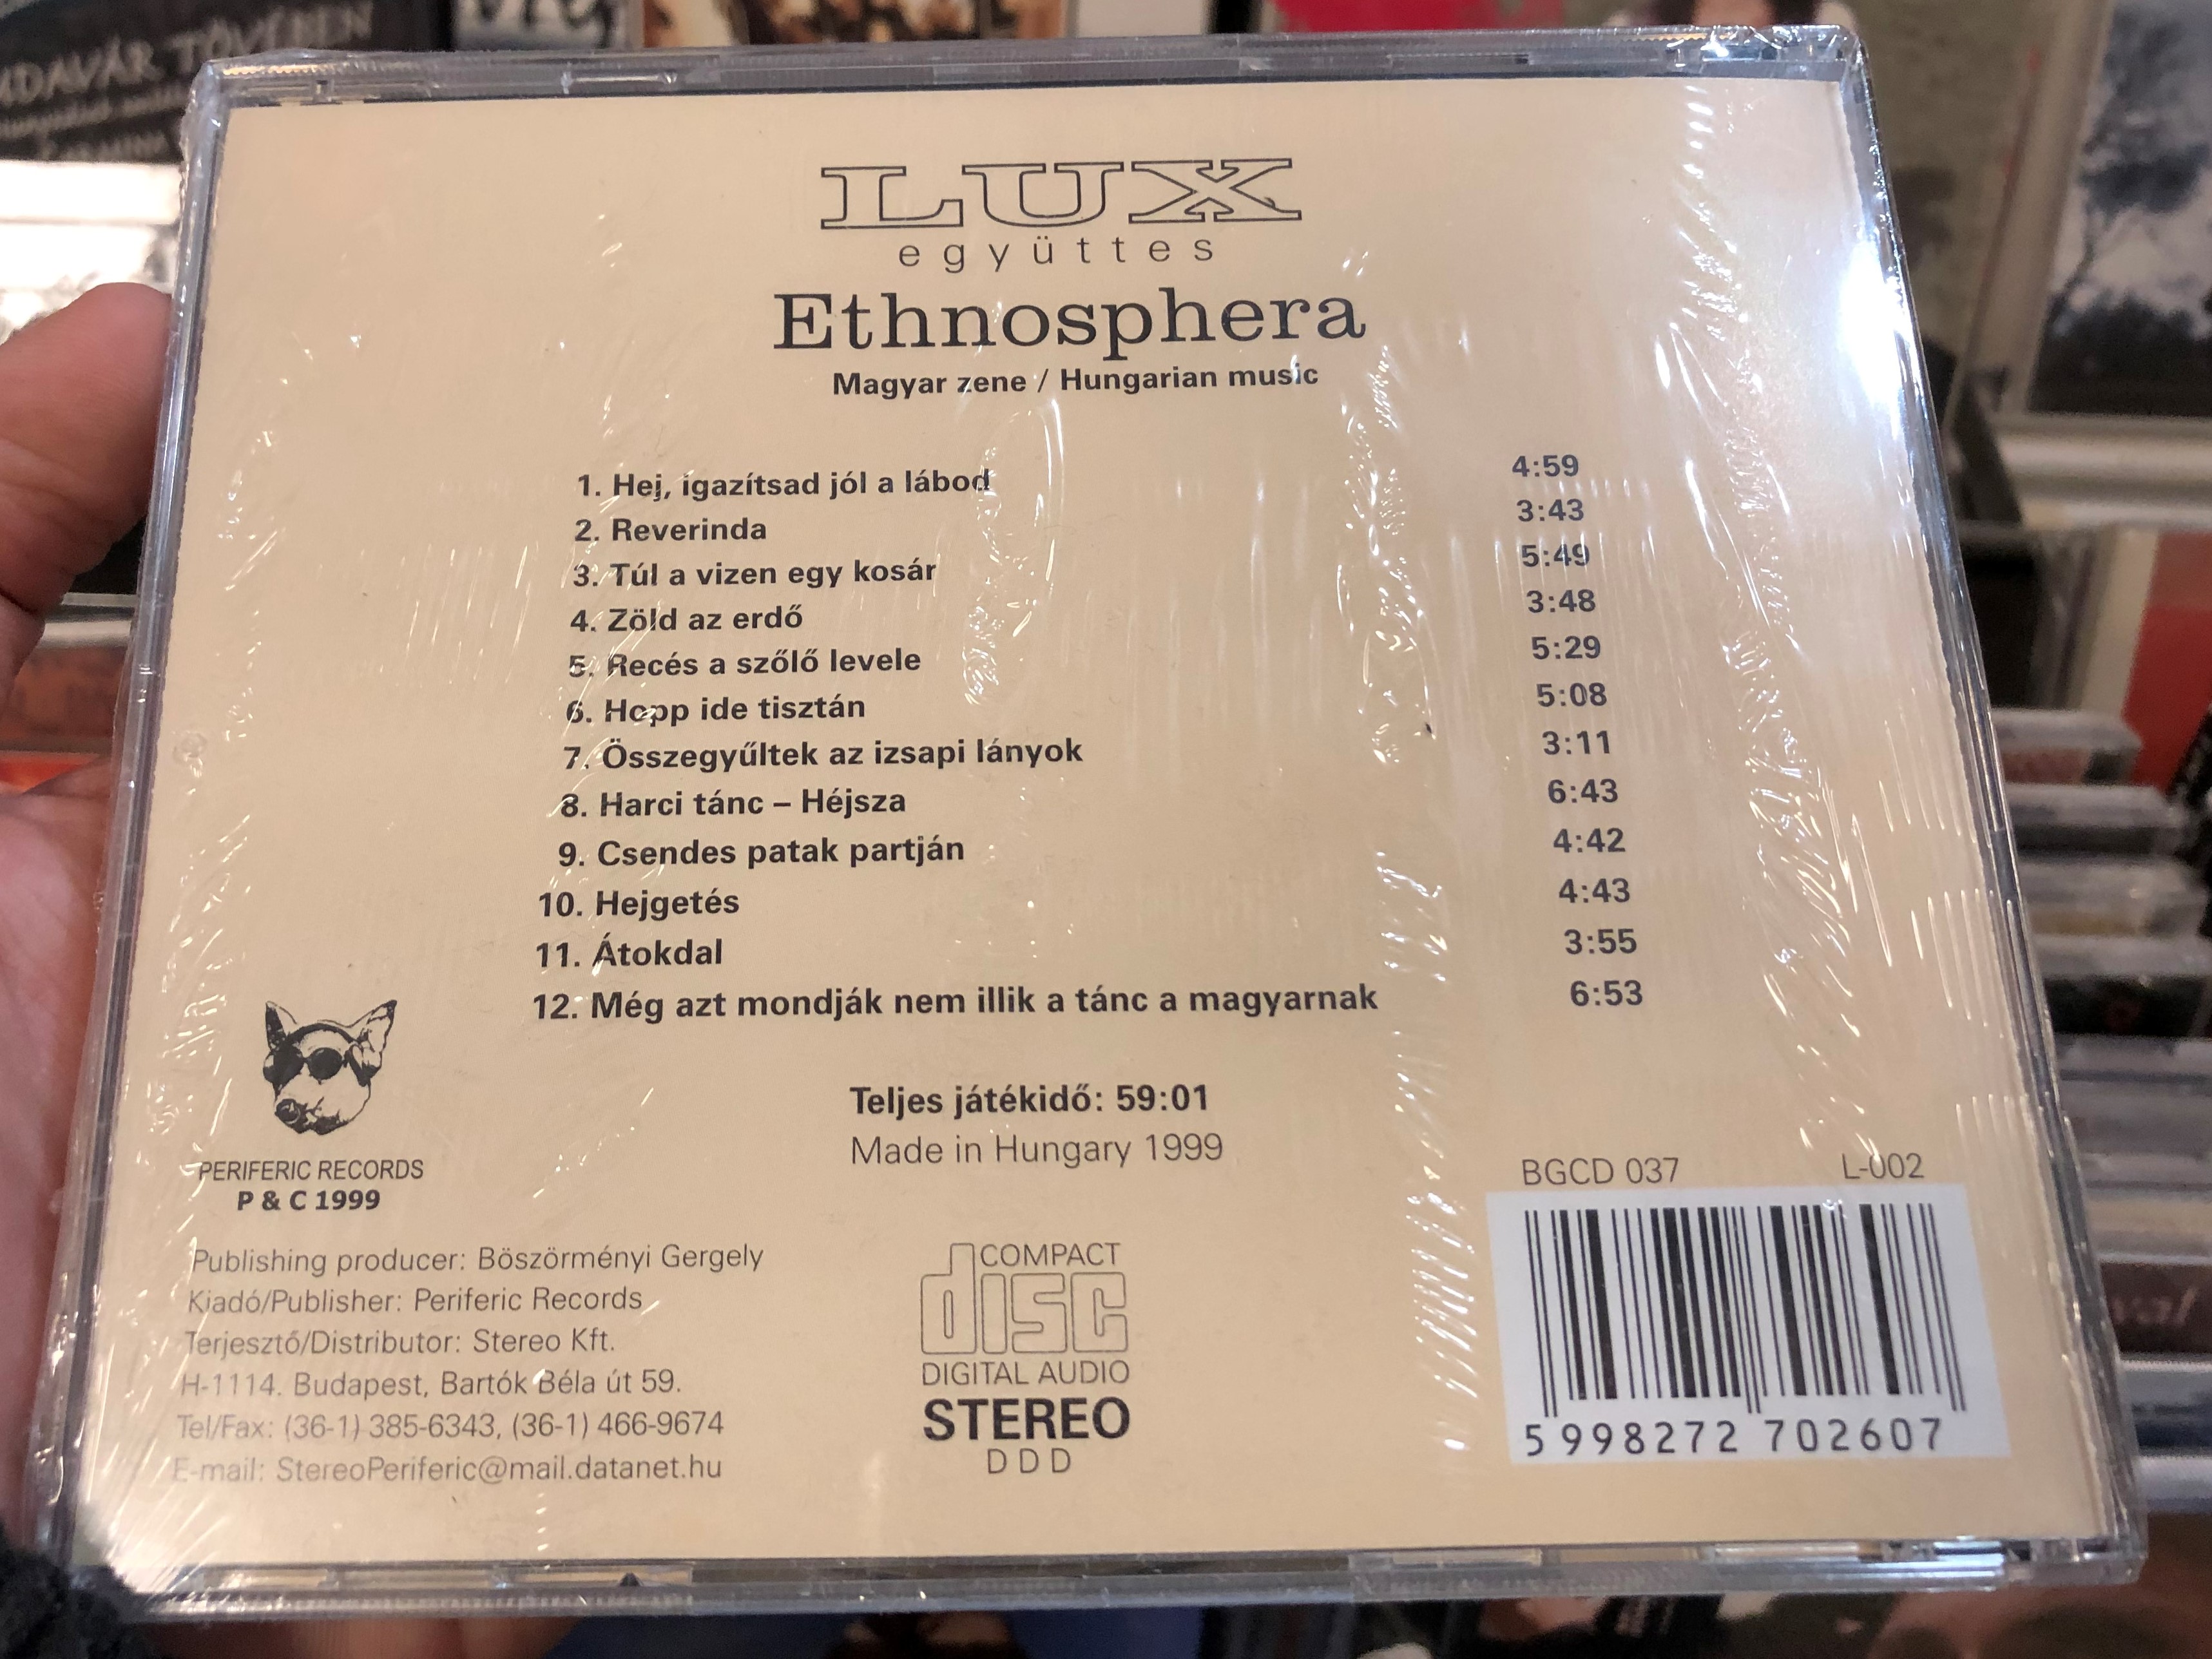 ethnosphera-magyar-zene-lux-egy-ttes-periferic-records-audio-cd-1999-stereo-bgcd-037-2-.jpg